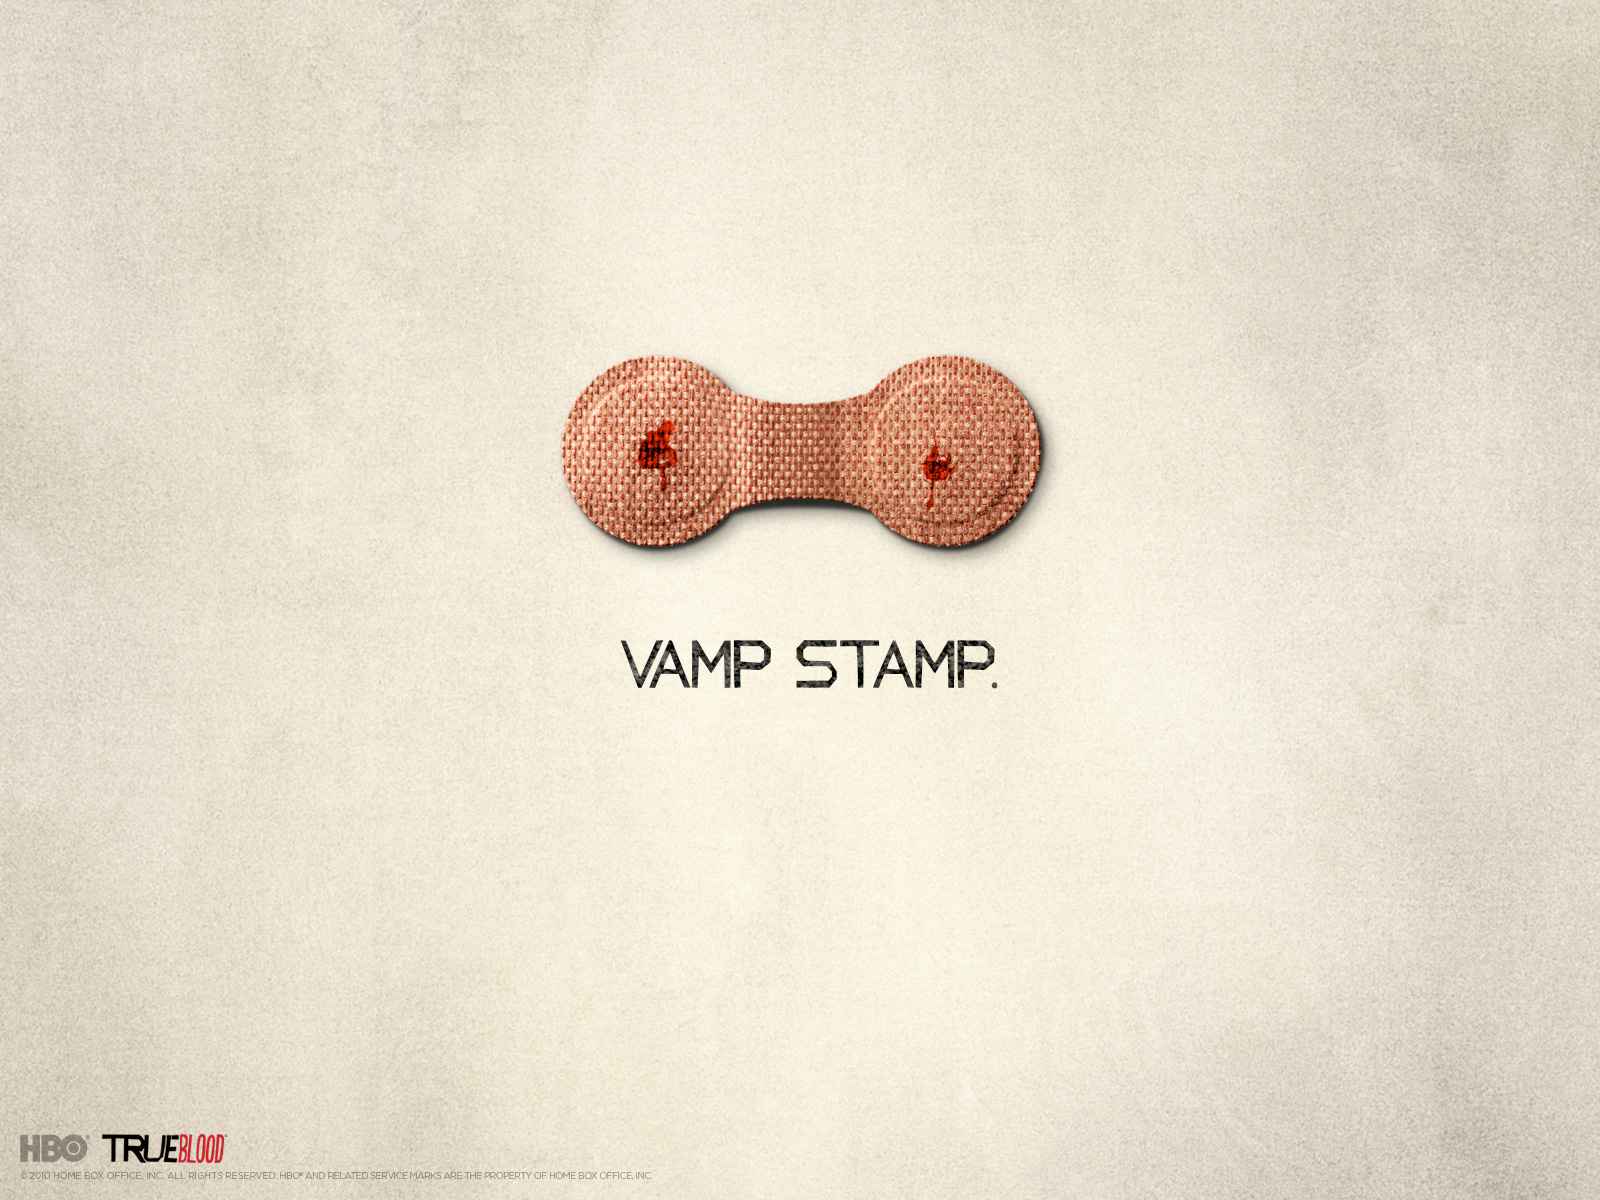 Download High quality vamp stamp True Blood wallpaper / 1600x1200